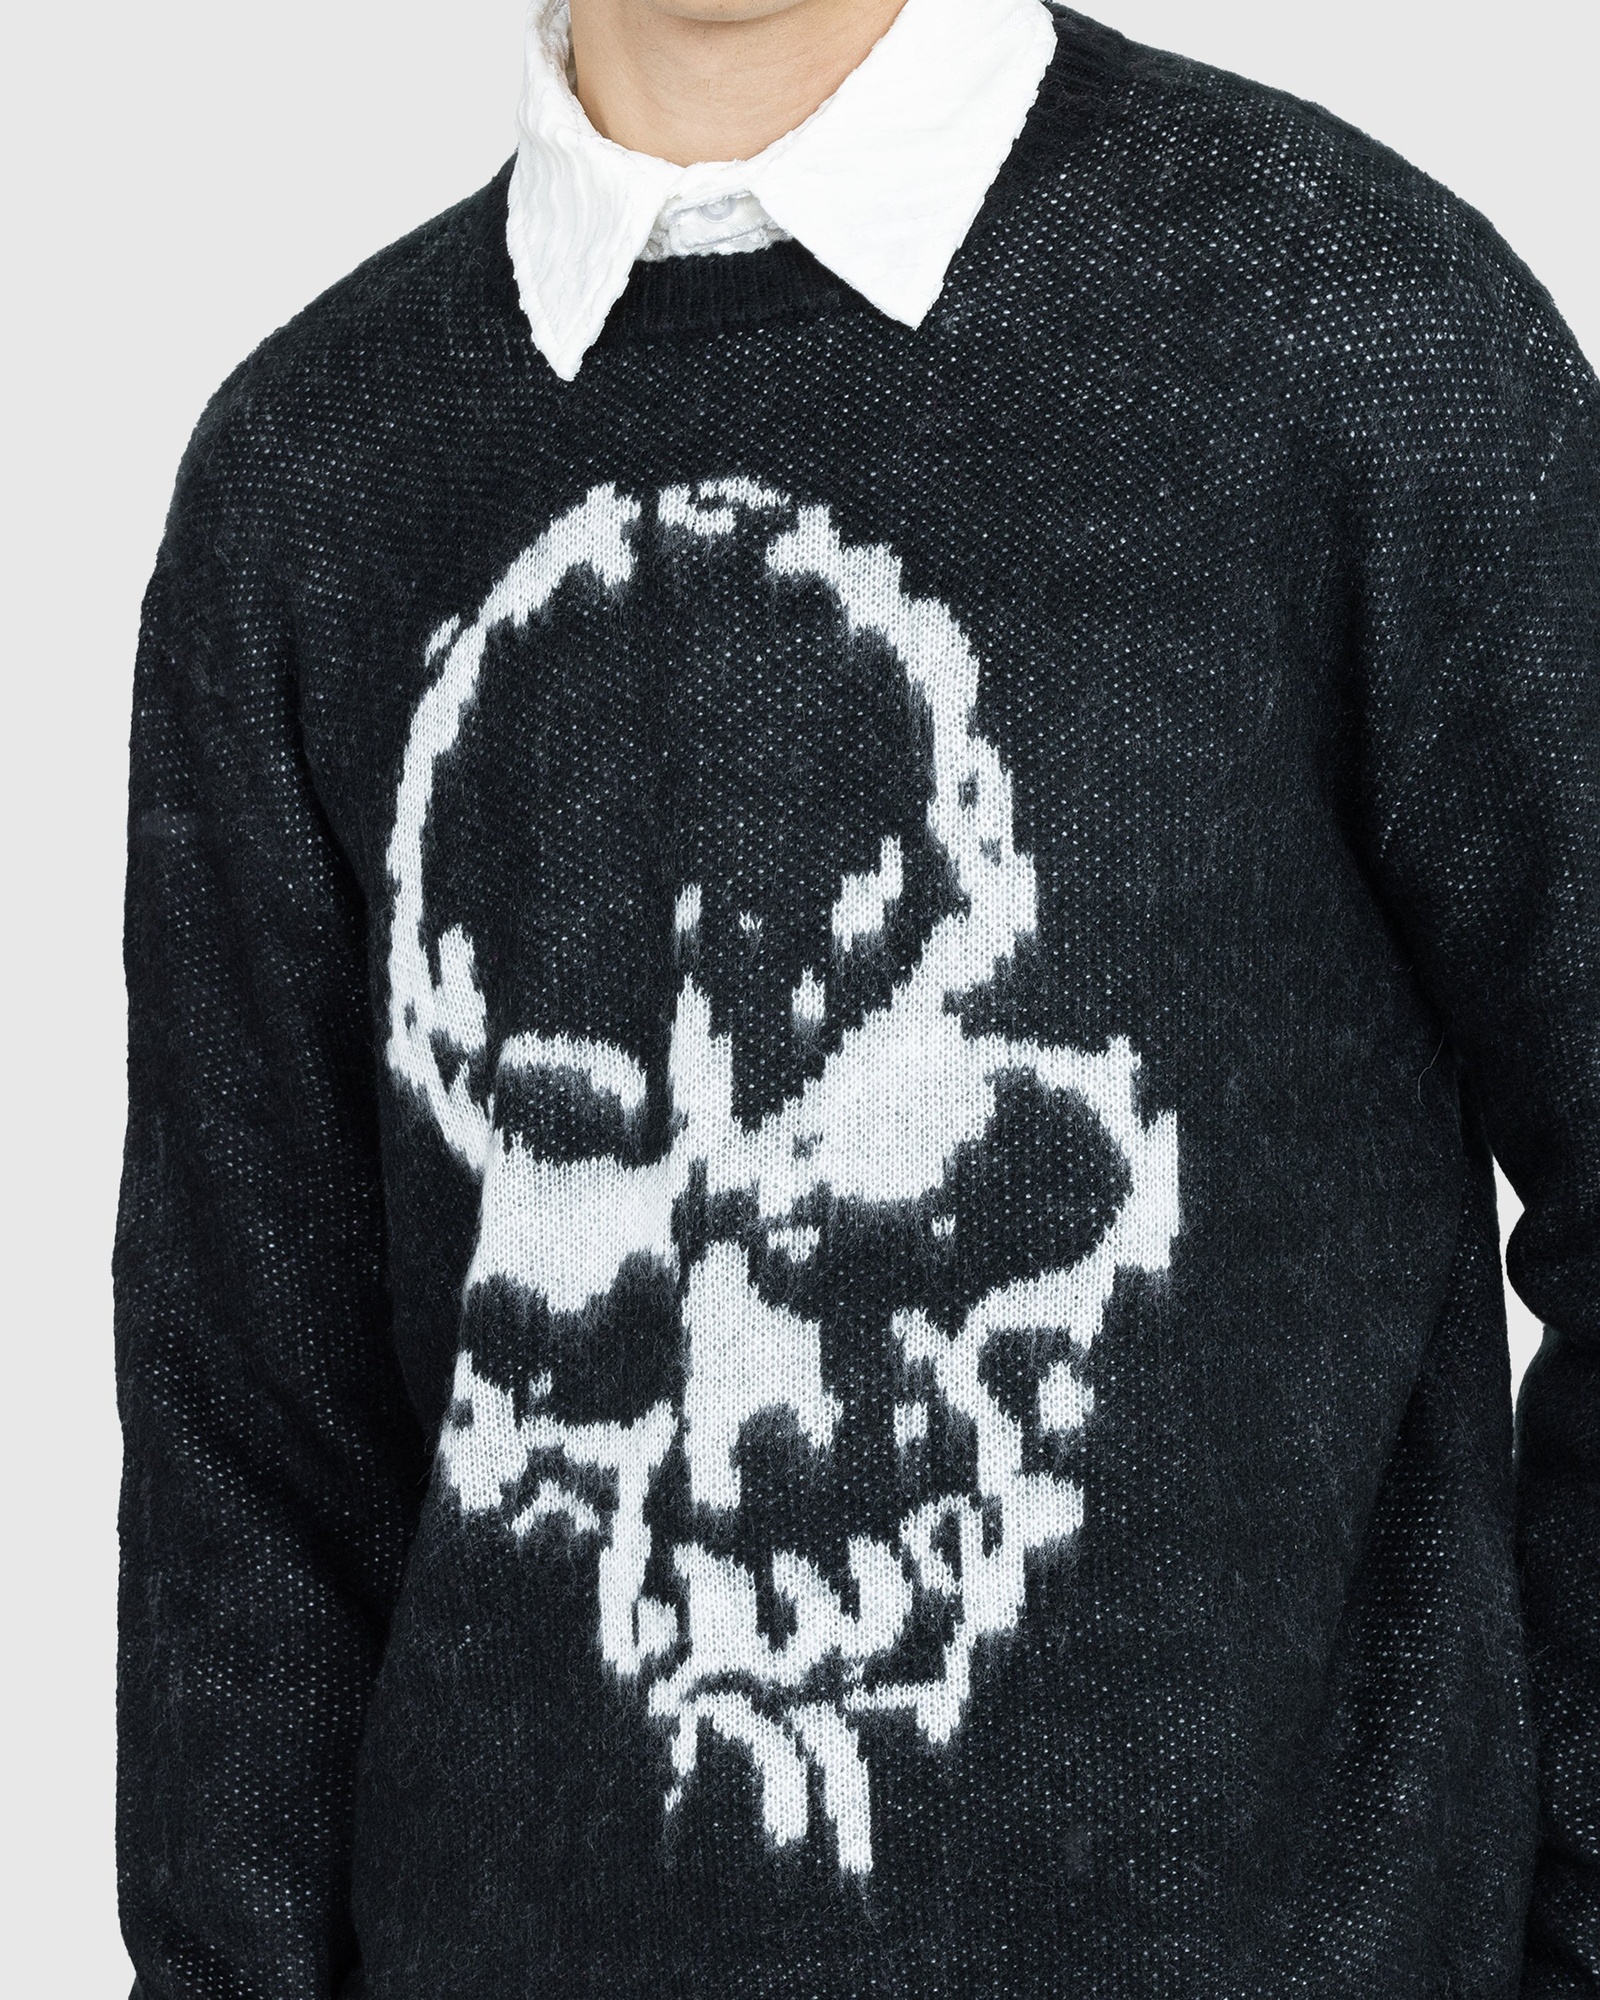 Noon Goons – Gatekeeper Sweater Black | Highsnobiety Shop